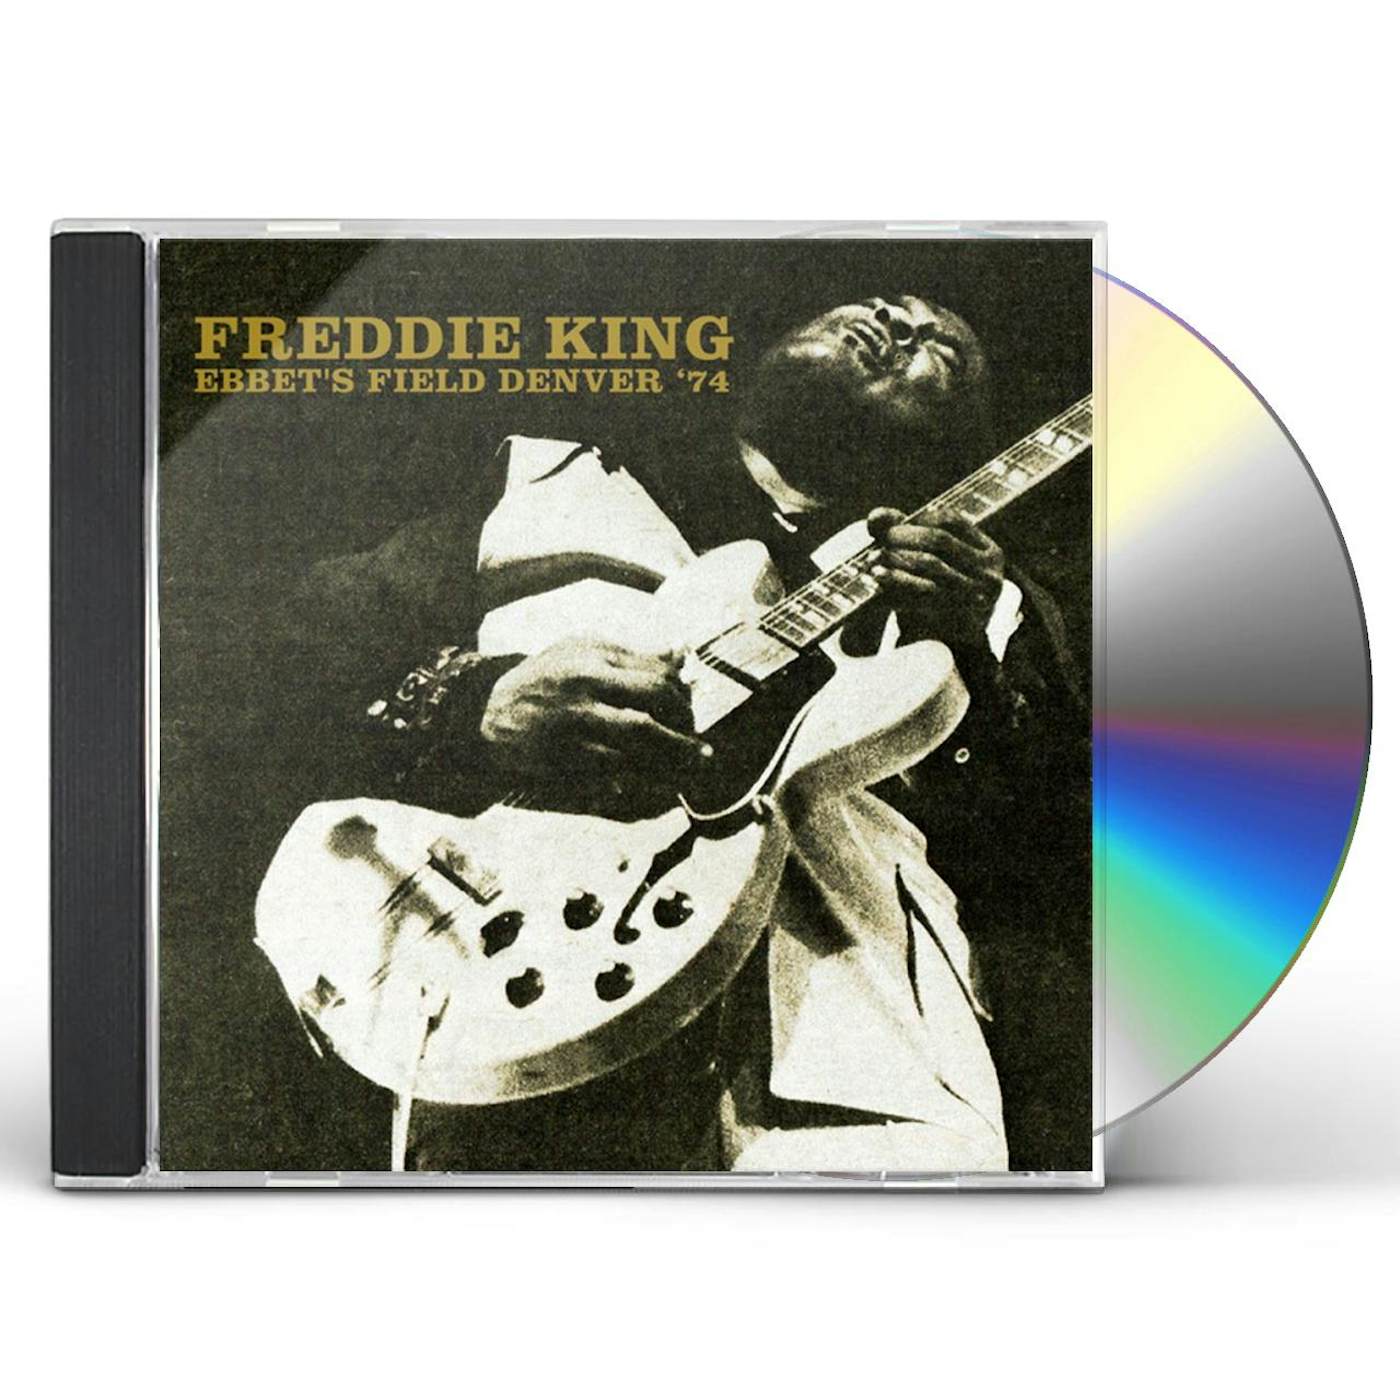 Freddie King EBBET'S FIELD DENVER '74 CD